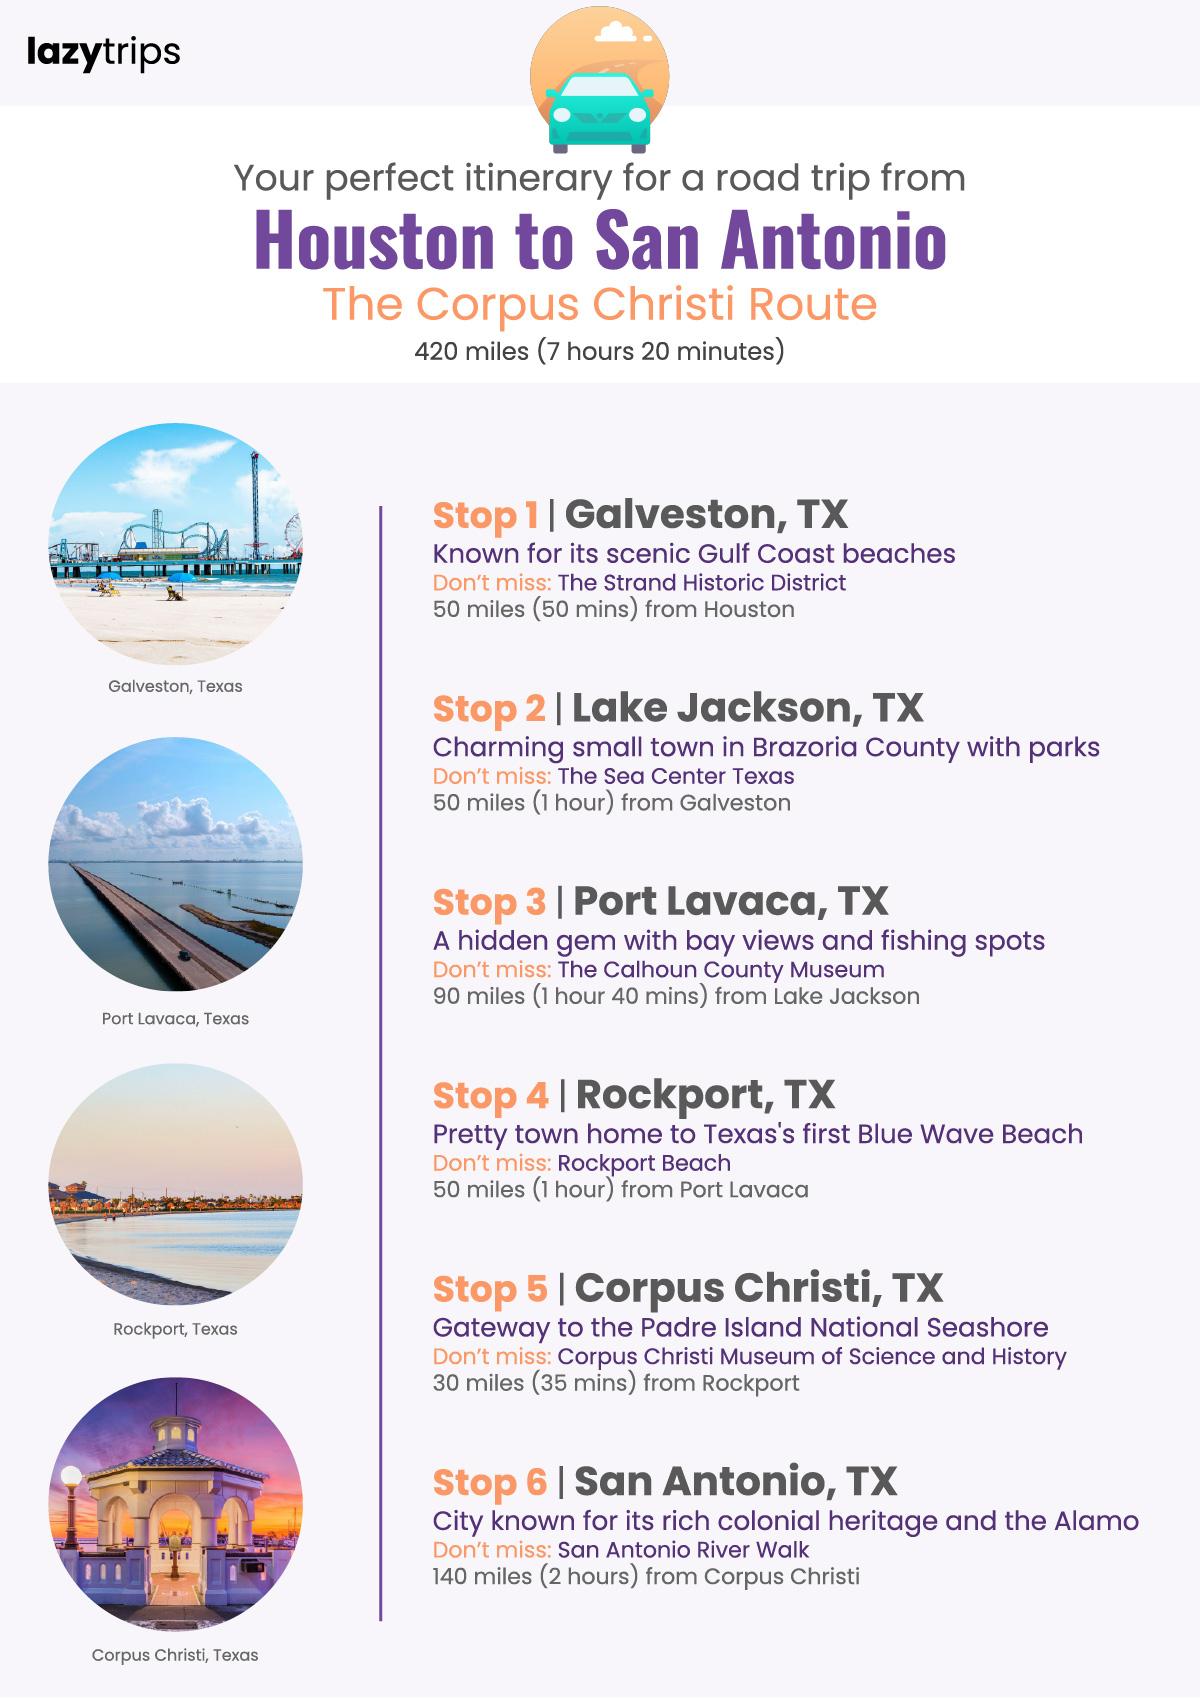 Itinerary for a road trip from Houston to San Antonio, stopping in Galveston, Lake Jackson, Port Lavaca, Rockport, Corpus Christi and San Antonio